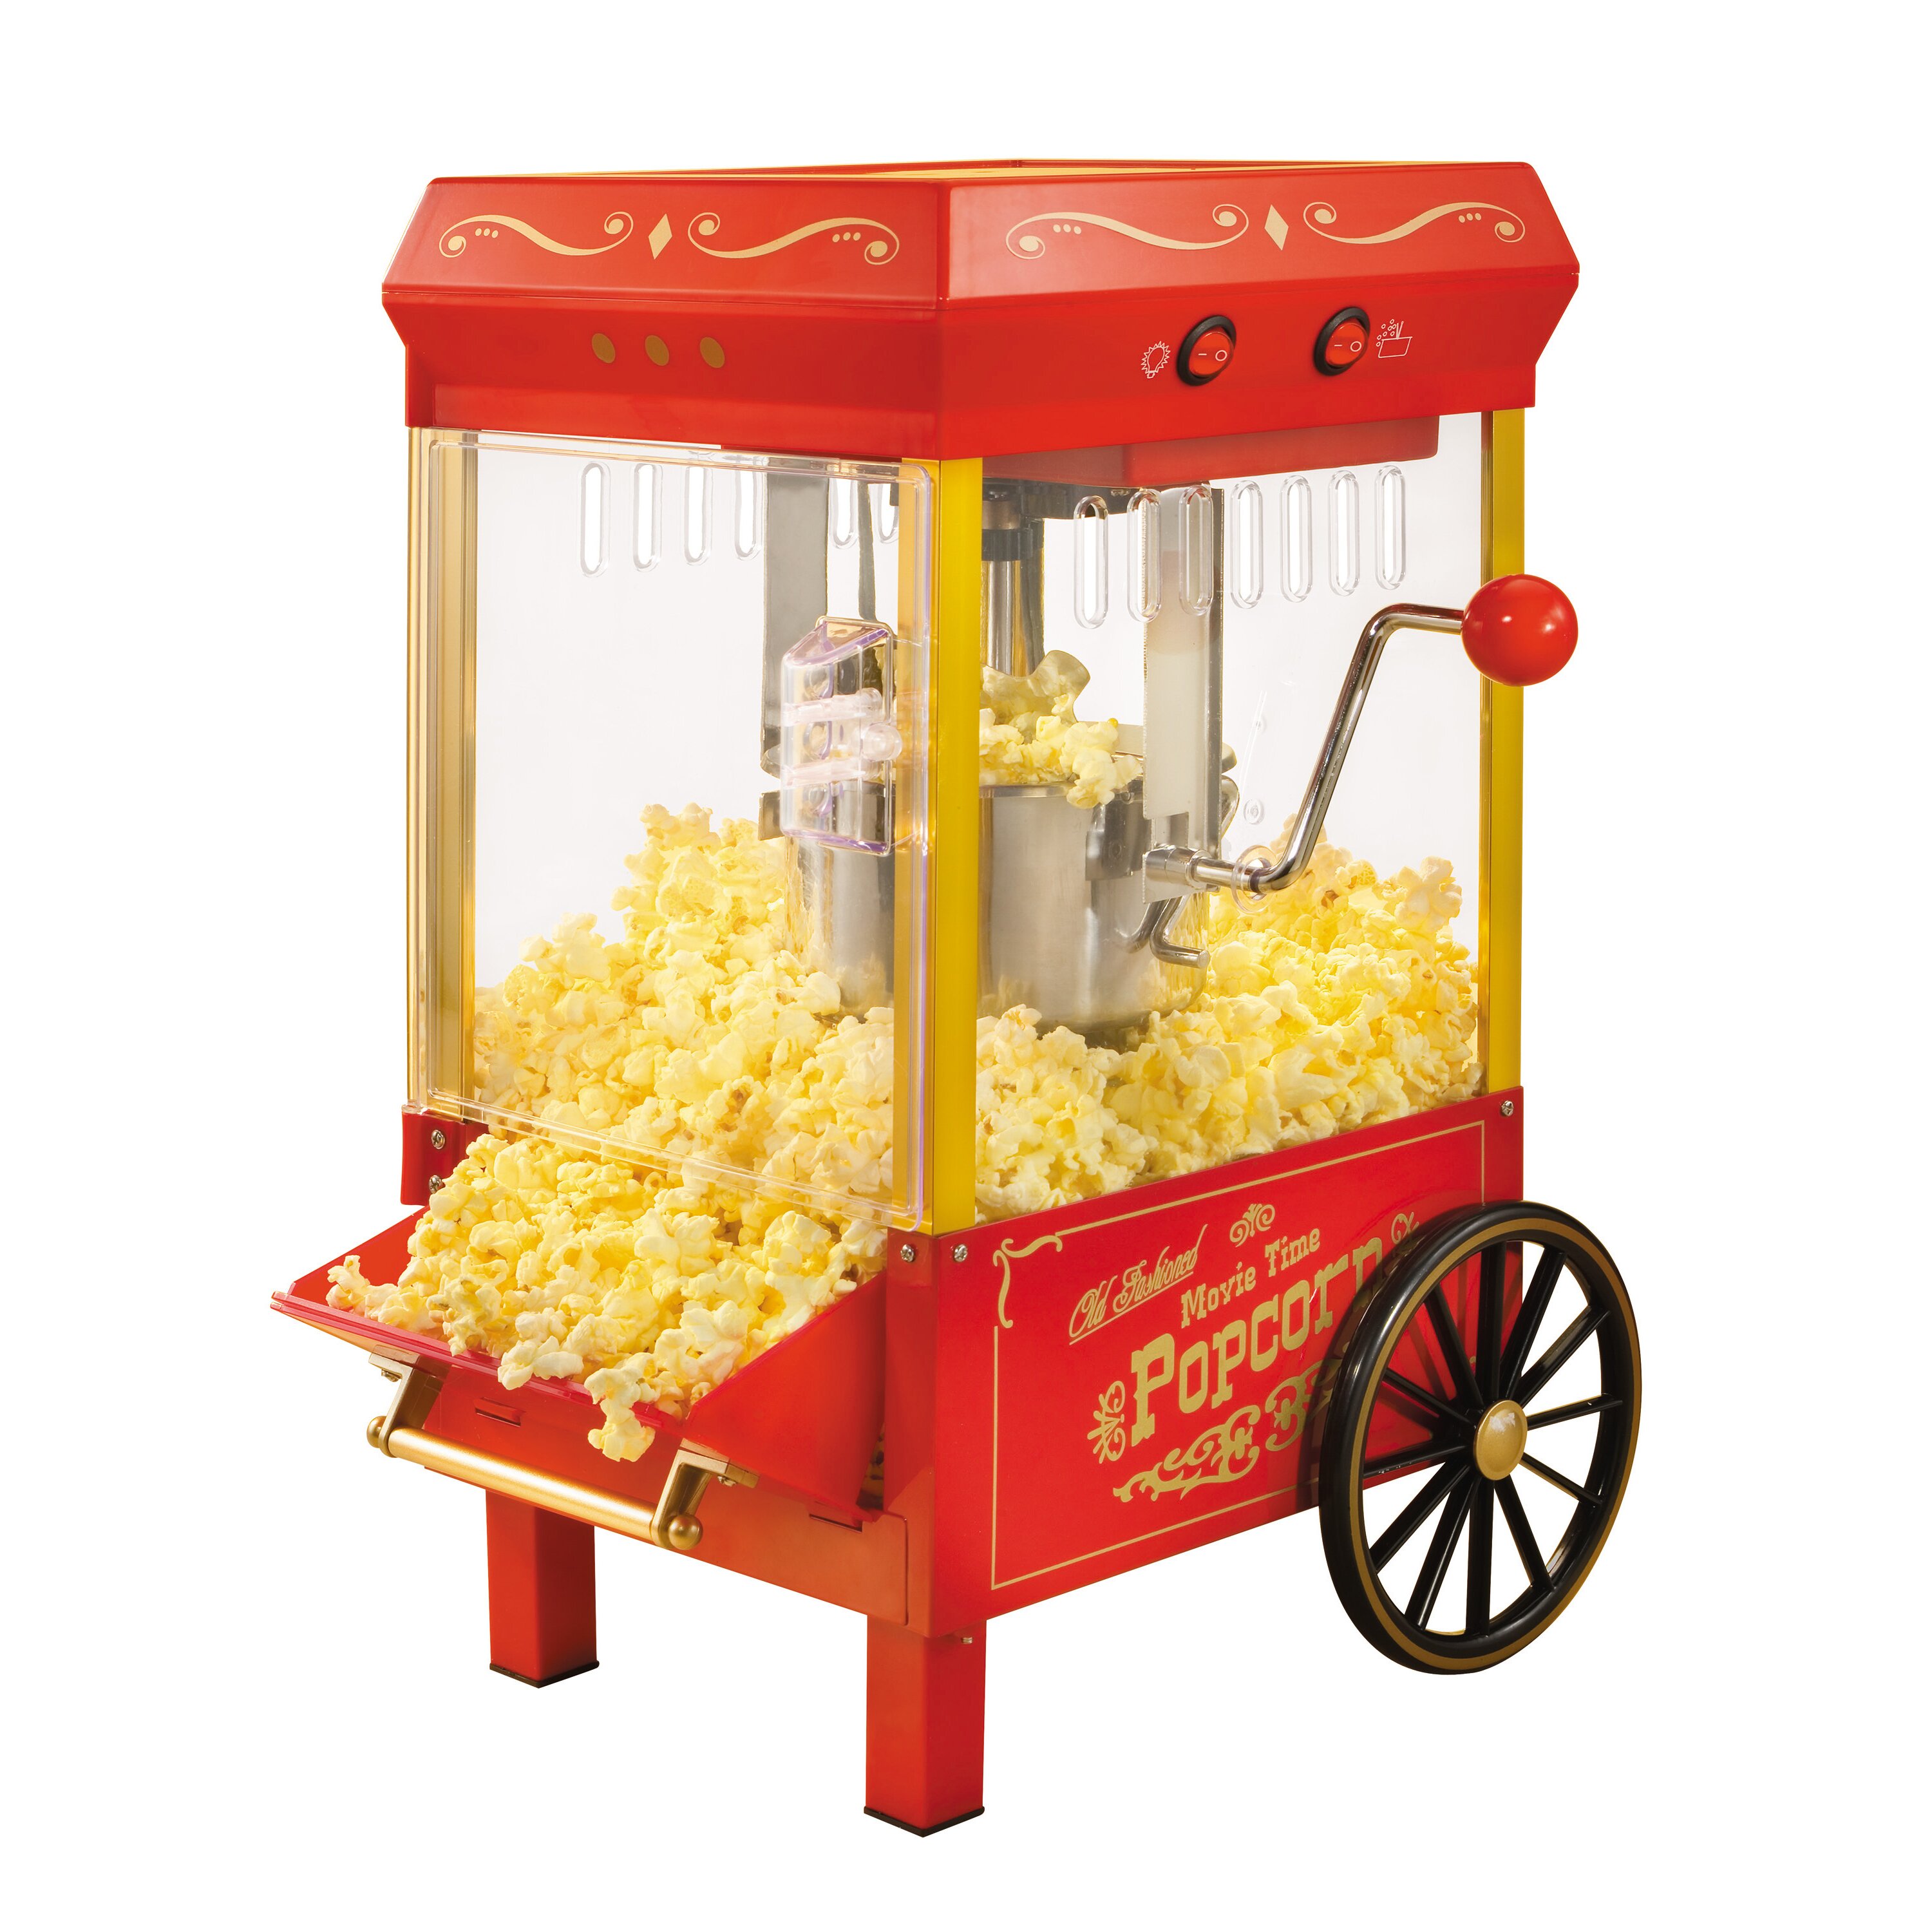 best oil for nostalgia popcorn machine